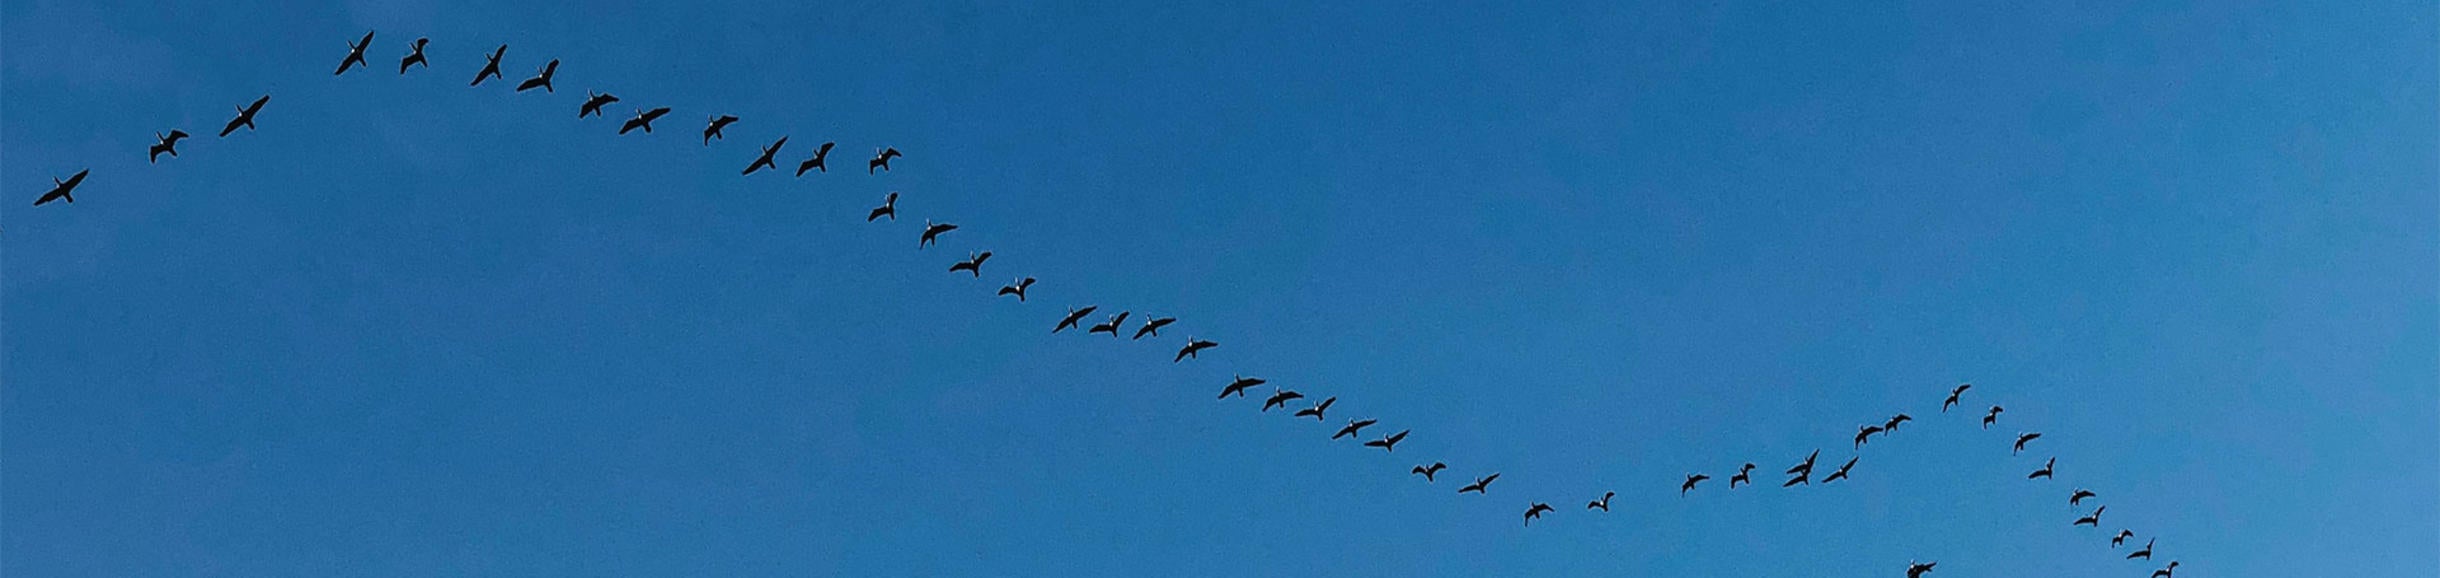 migrating geese (c) Howie Mapson Unsplash